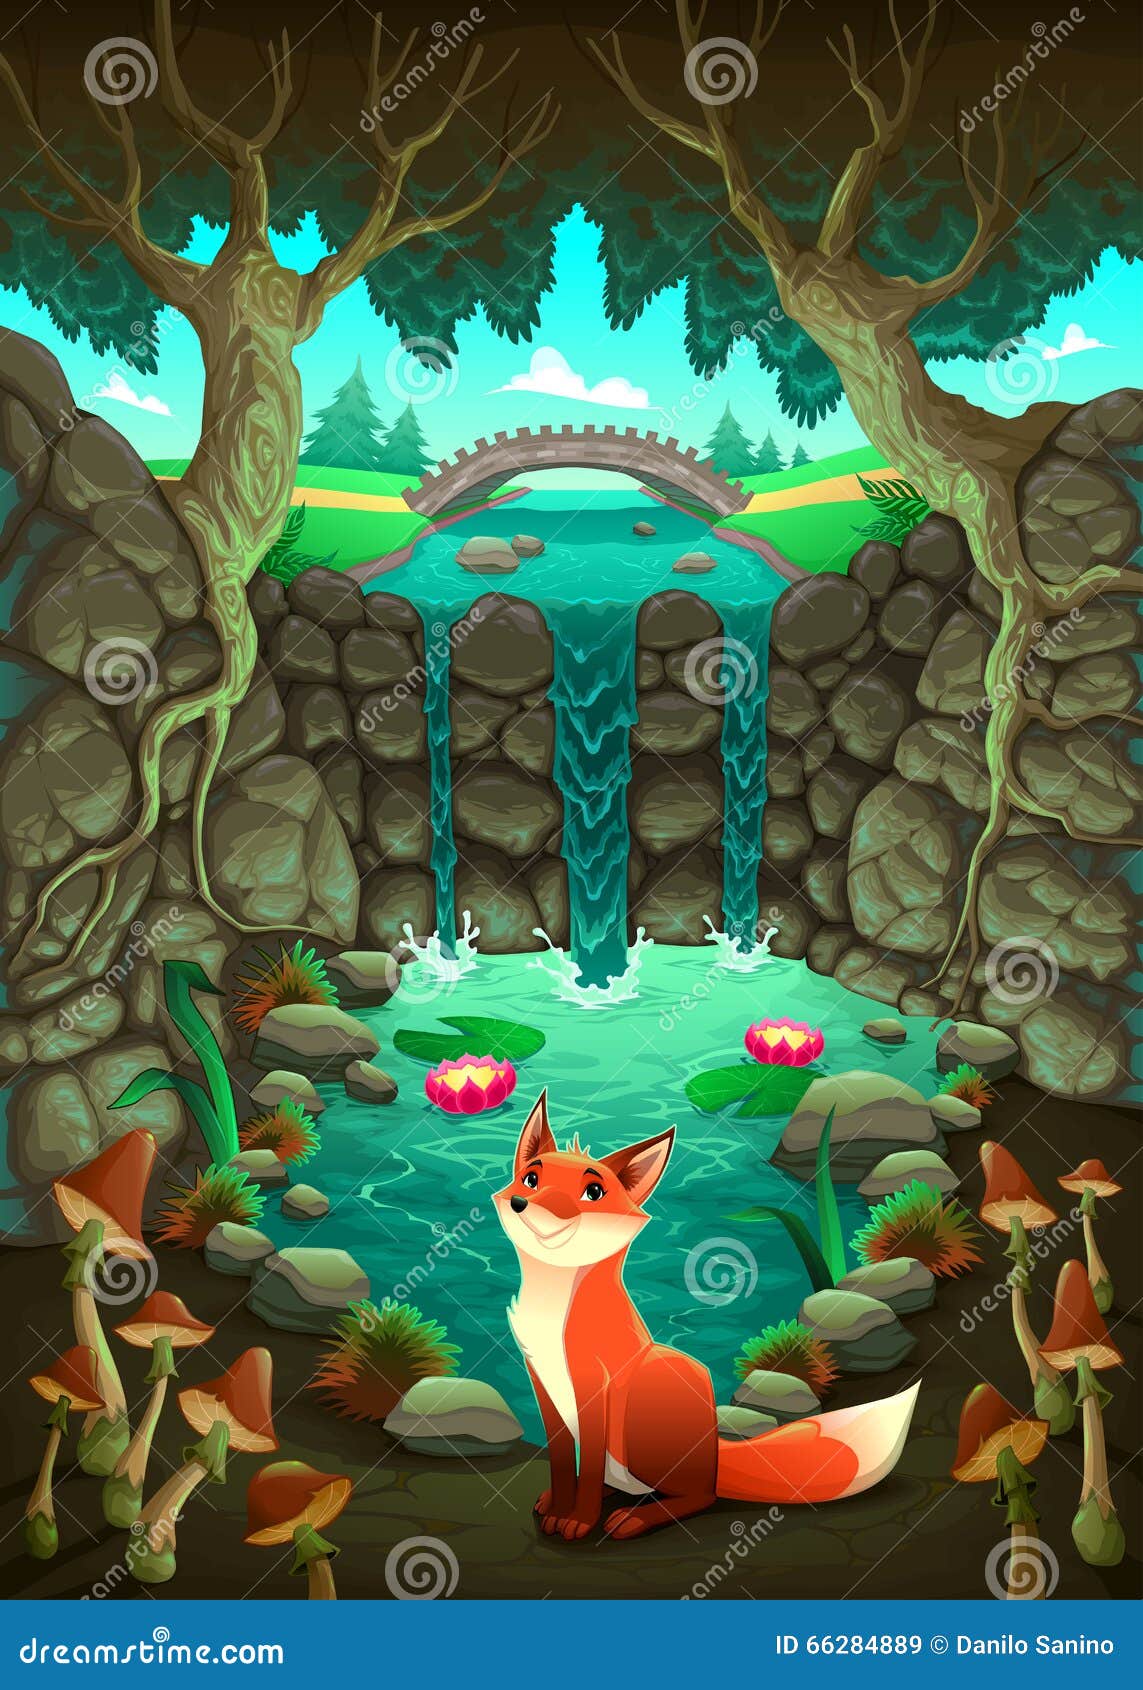 the fox near a pond